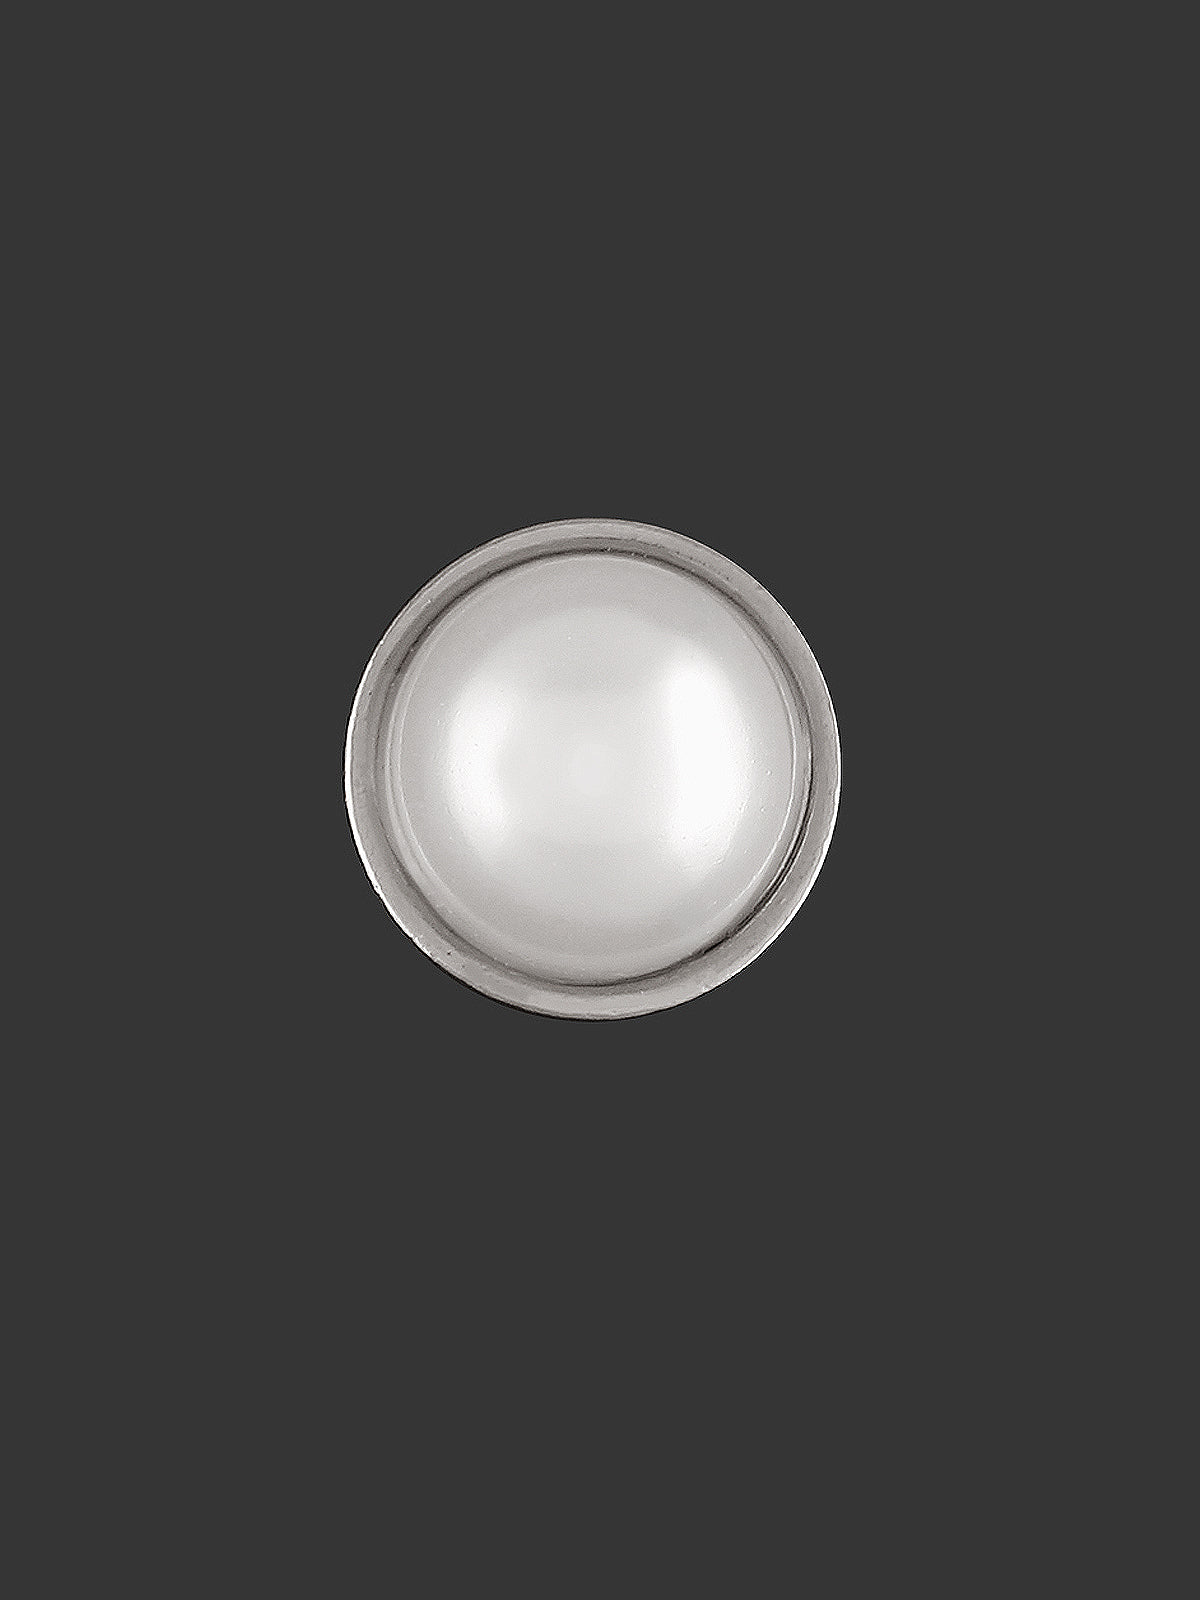 Shiny Silver & Matte Silver Round Shape Pearl Button